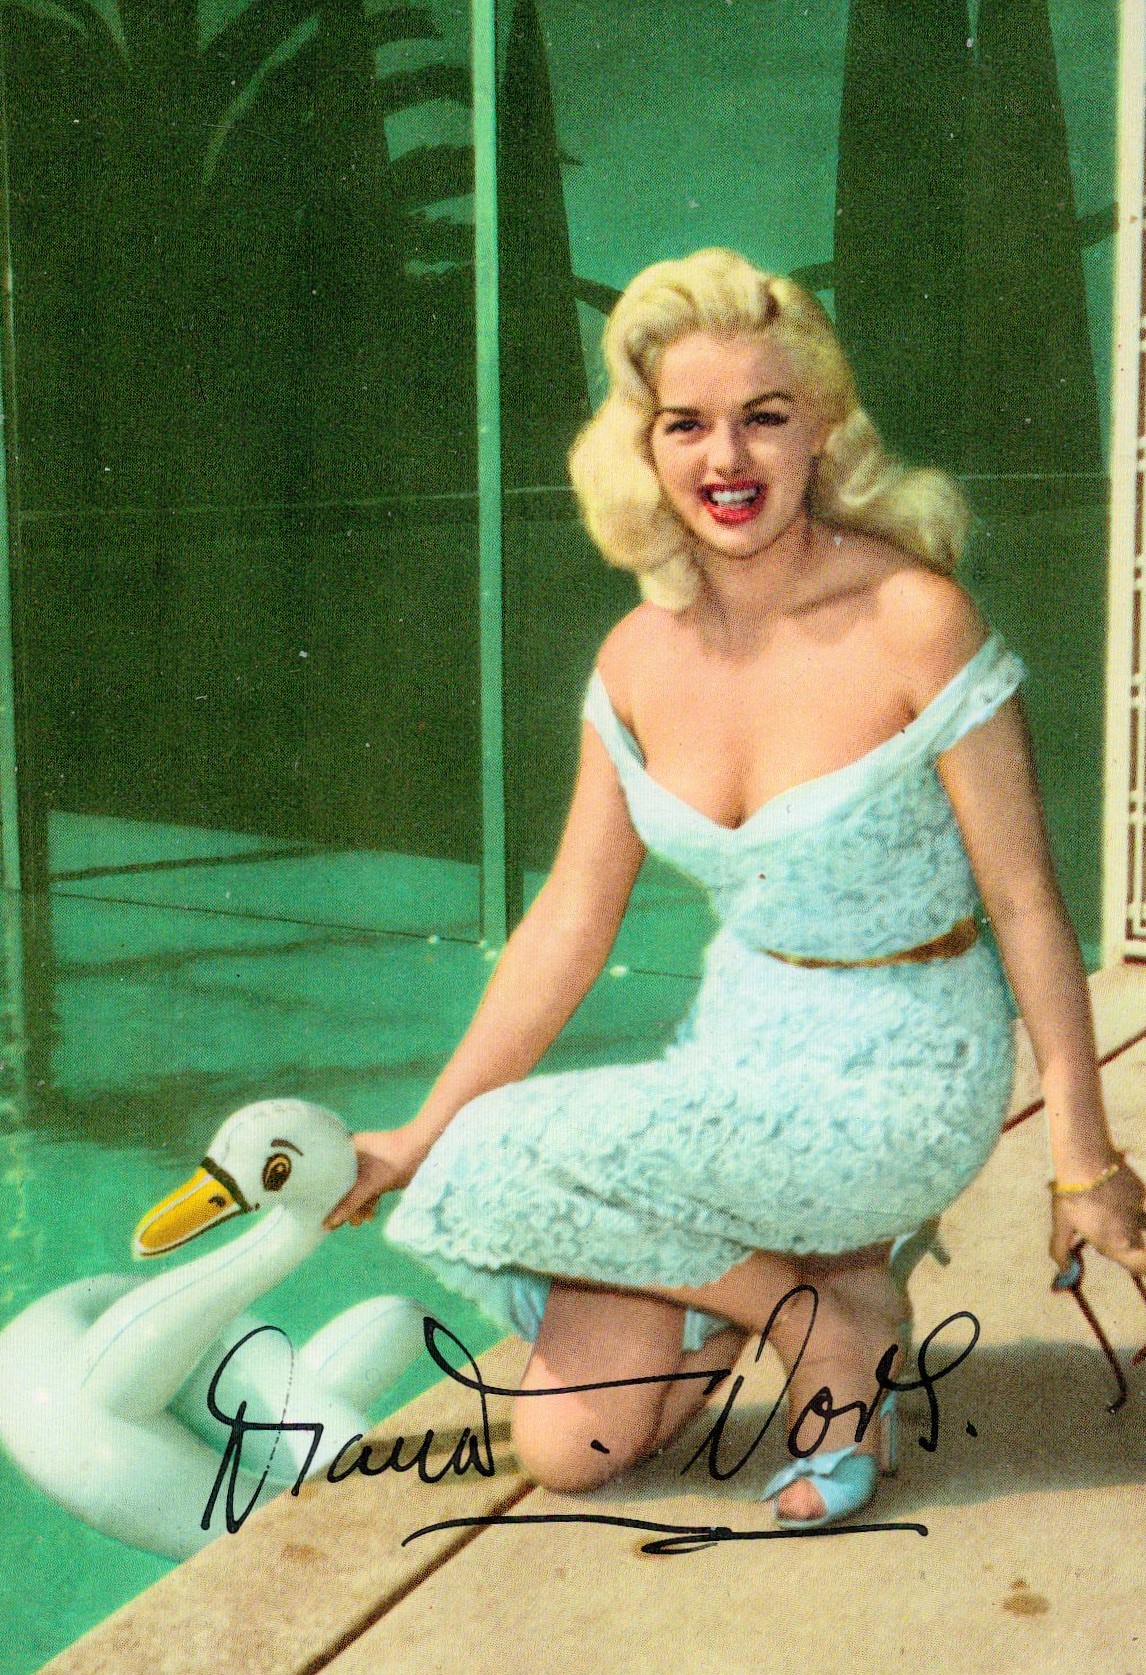 Diana Dors signed 6x4 colour post card photo. Diana Dors (born Diana Mary Fluck; 23 October 1931 - 4